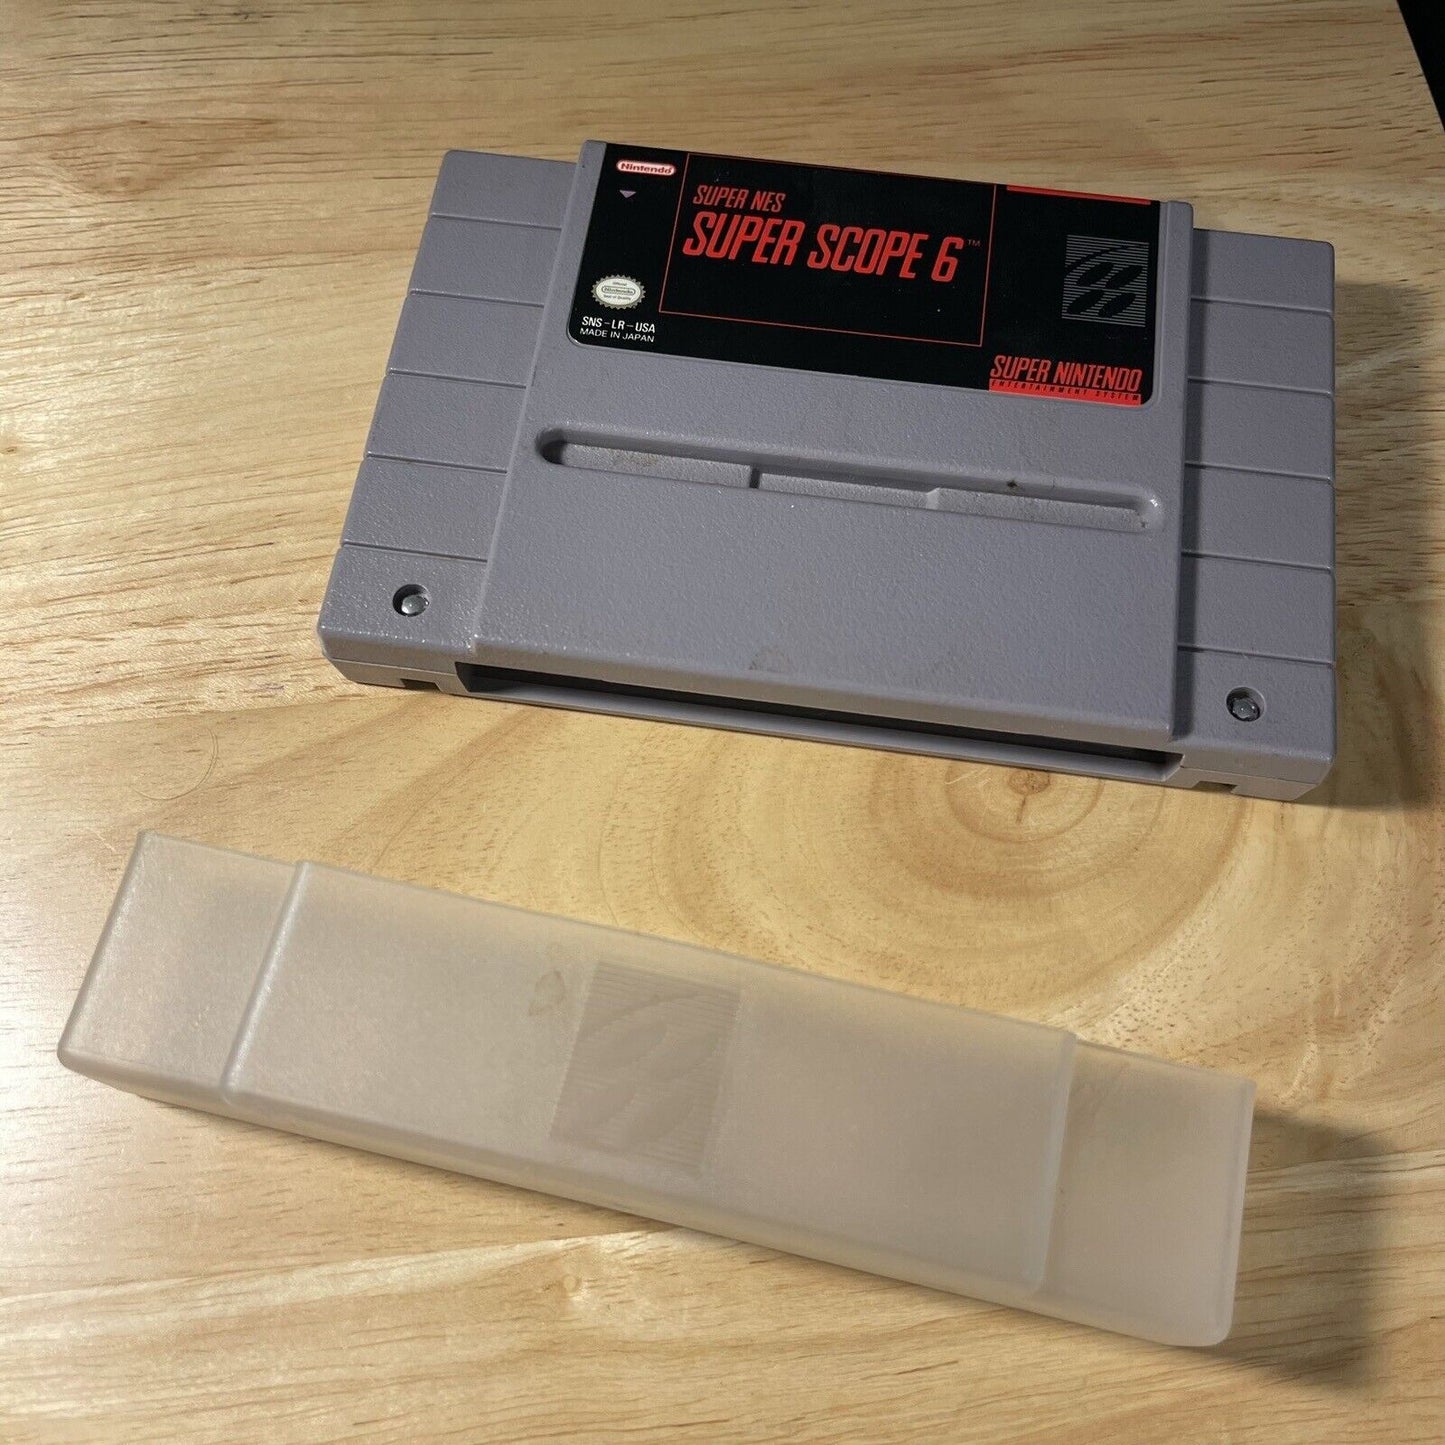 Super Scope 6 (Super Nintendo, SNES) - Tested Working